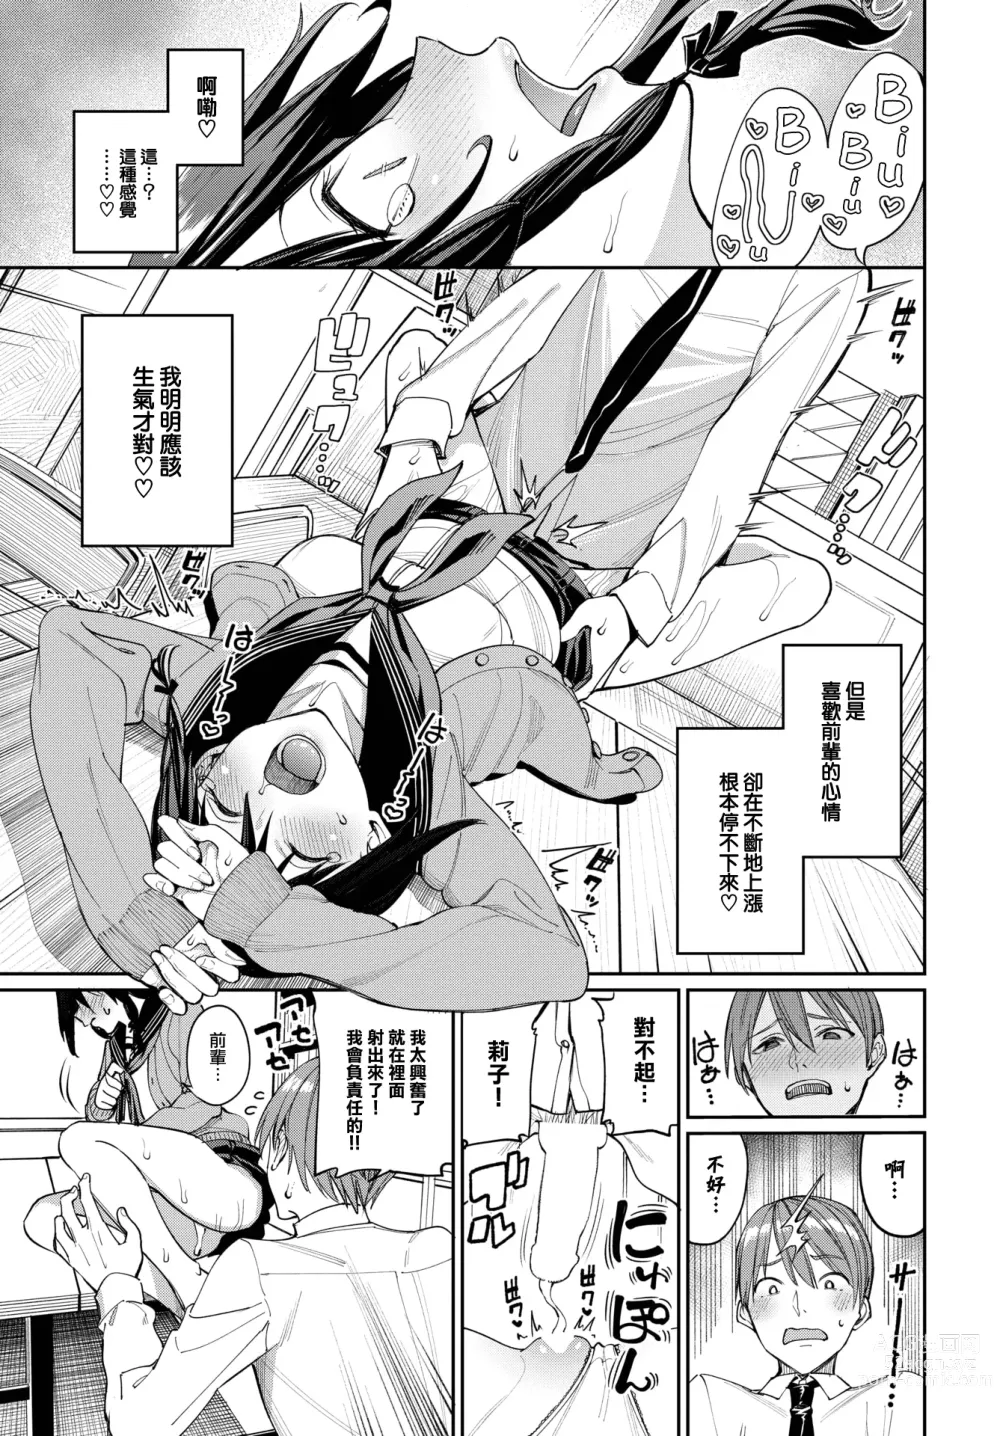 Page 15 of manga Riko no Hatsujou Chuuihou! - Im in heat so much. I can't take it...